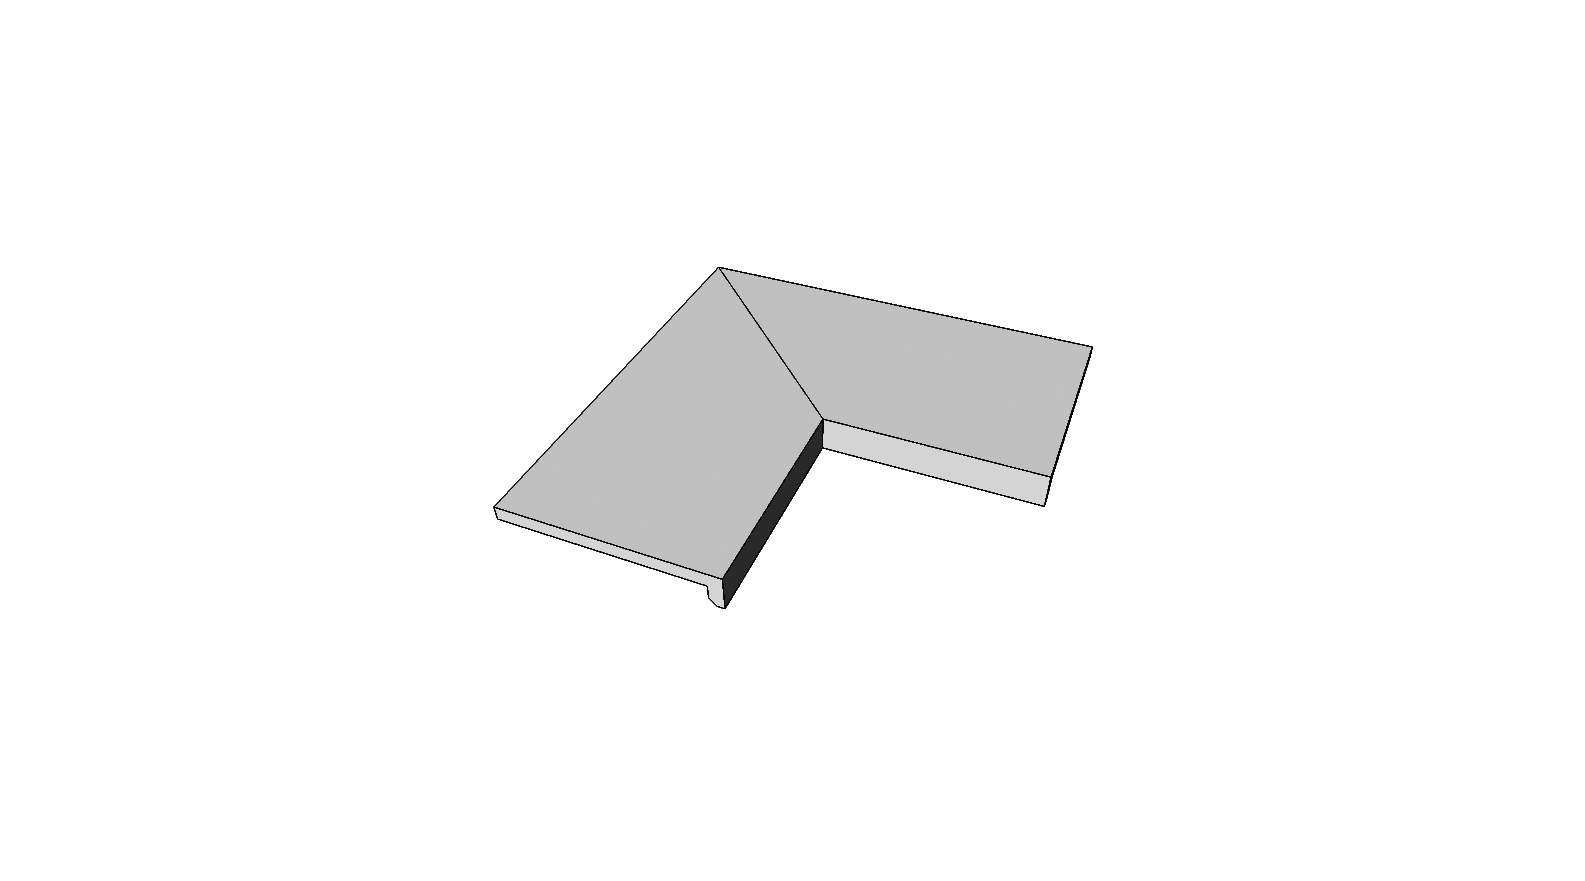 Randtegel met L-vormige aflopende rand vastgelijmd aan de binnenhoek (2 stuks) <span style="white-space:nowrap;">30x60 cm</span>   <span style="white-space:nowrap;">ép. 20mm</span>